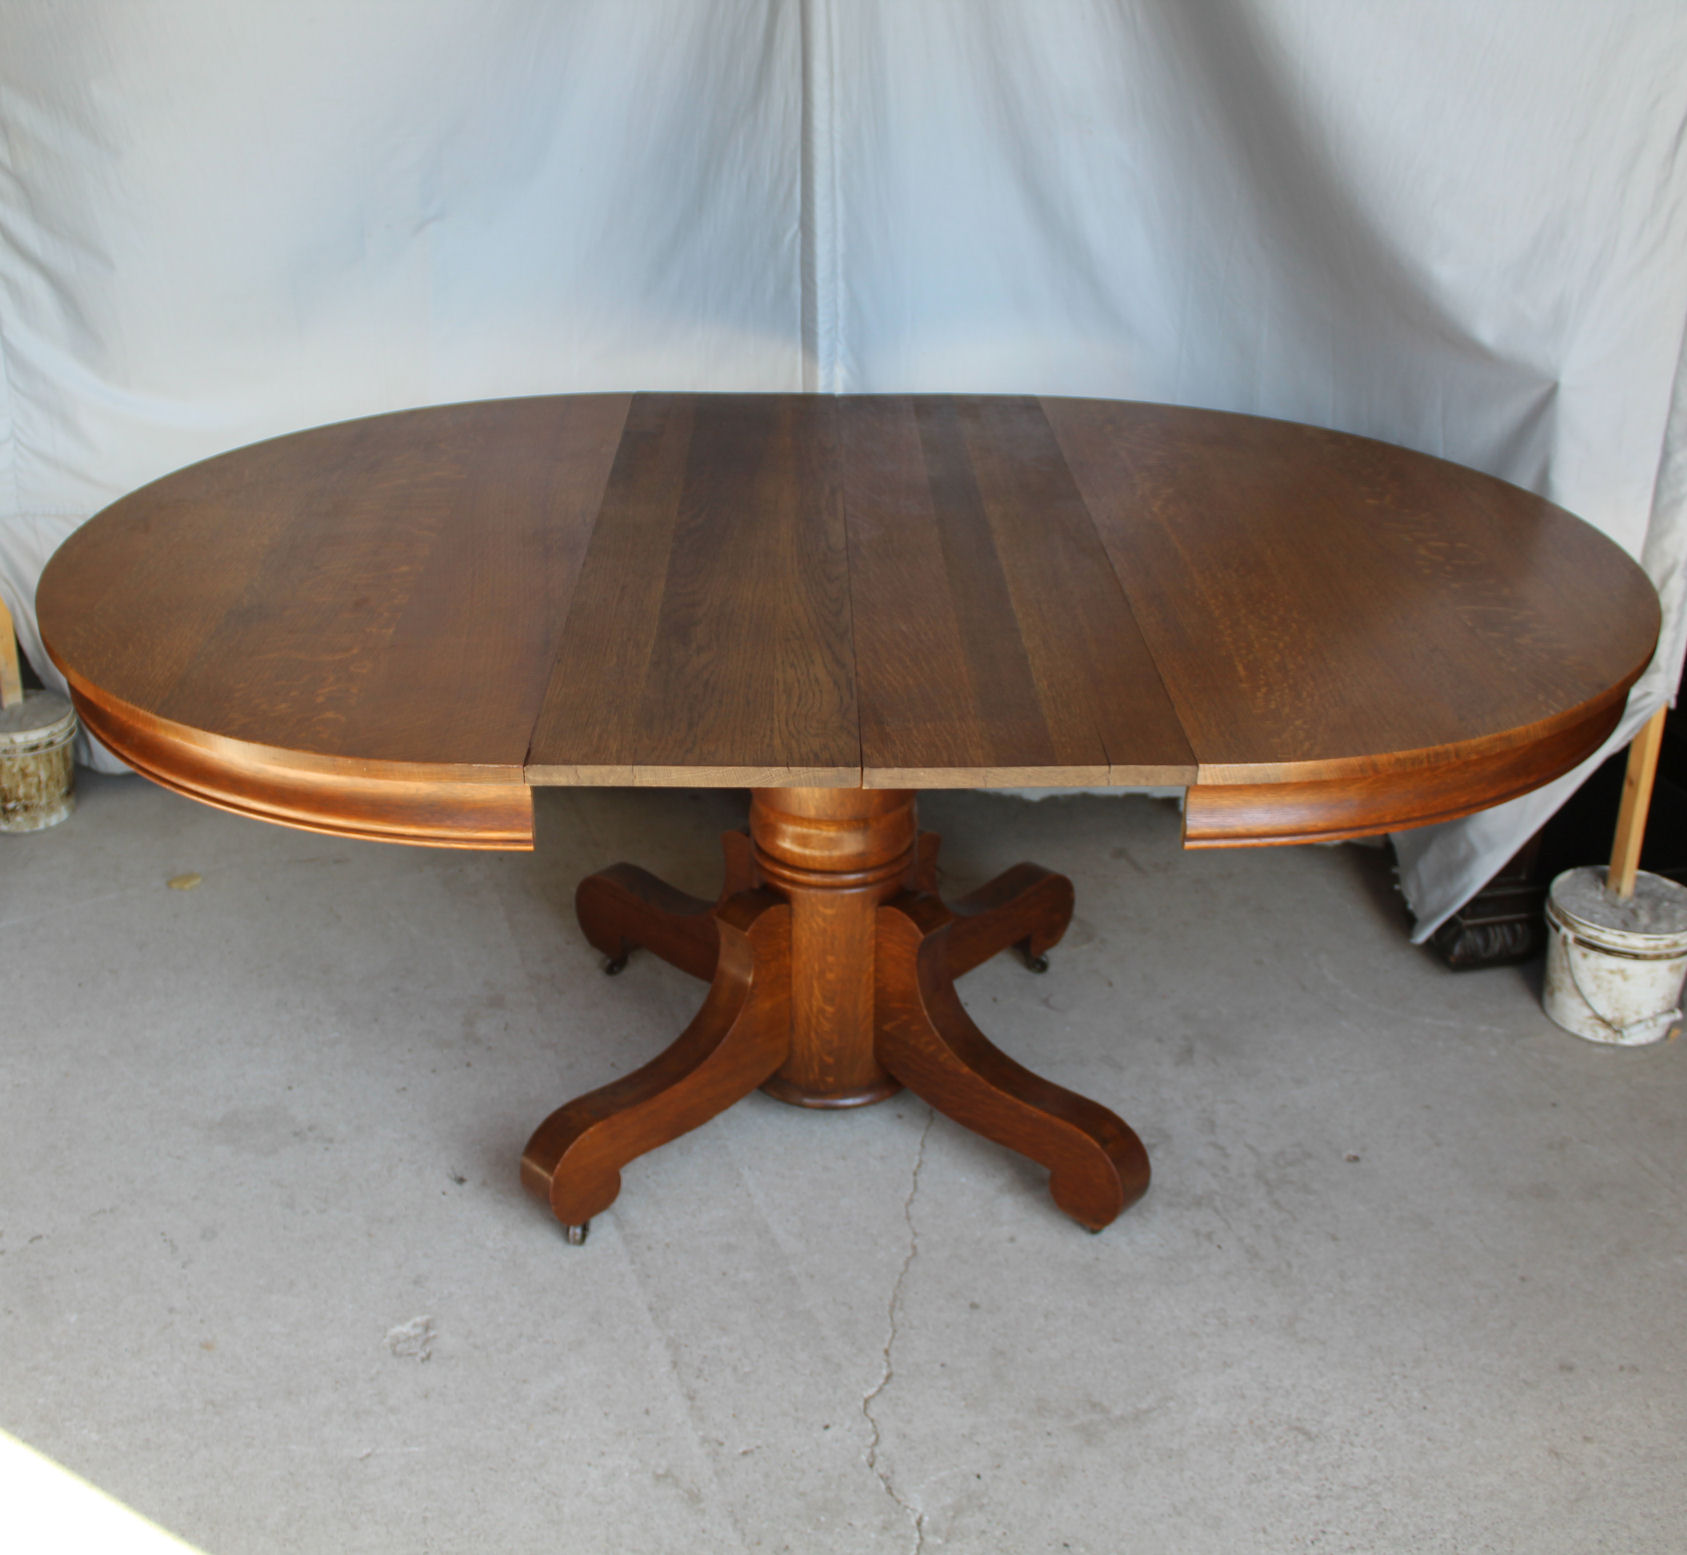 Bargain John's Antiques | Antique Round Oak Table - 4 leaves 48 inch ...